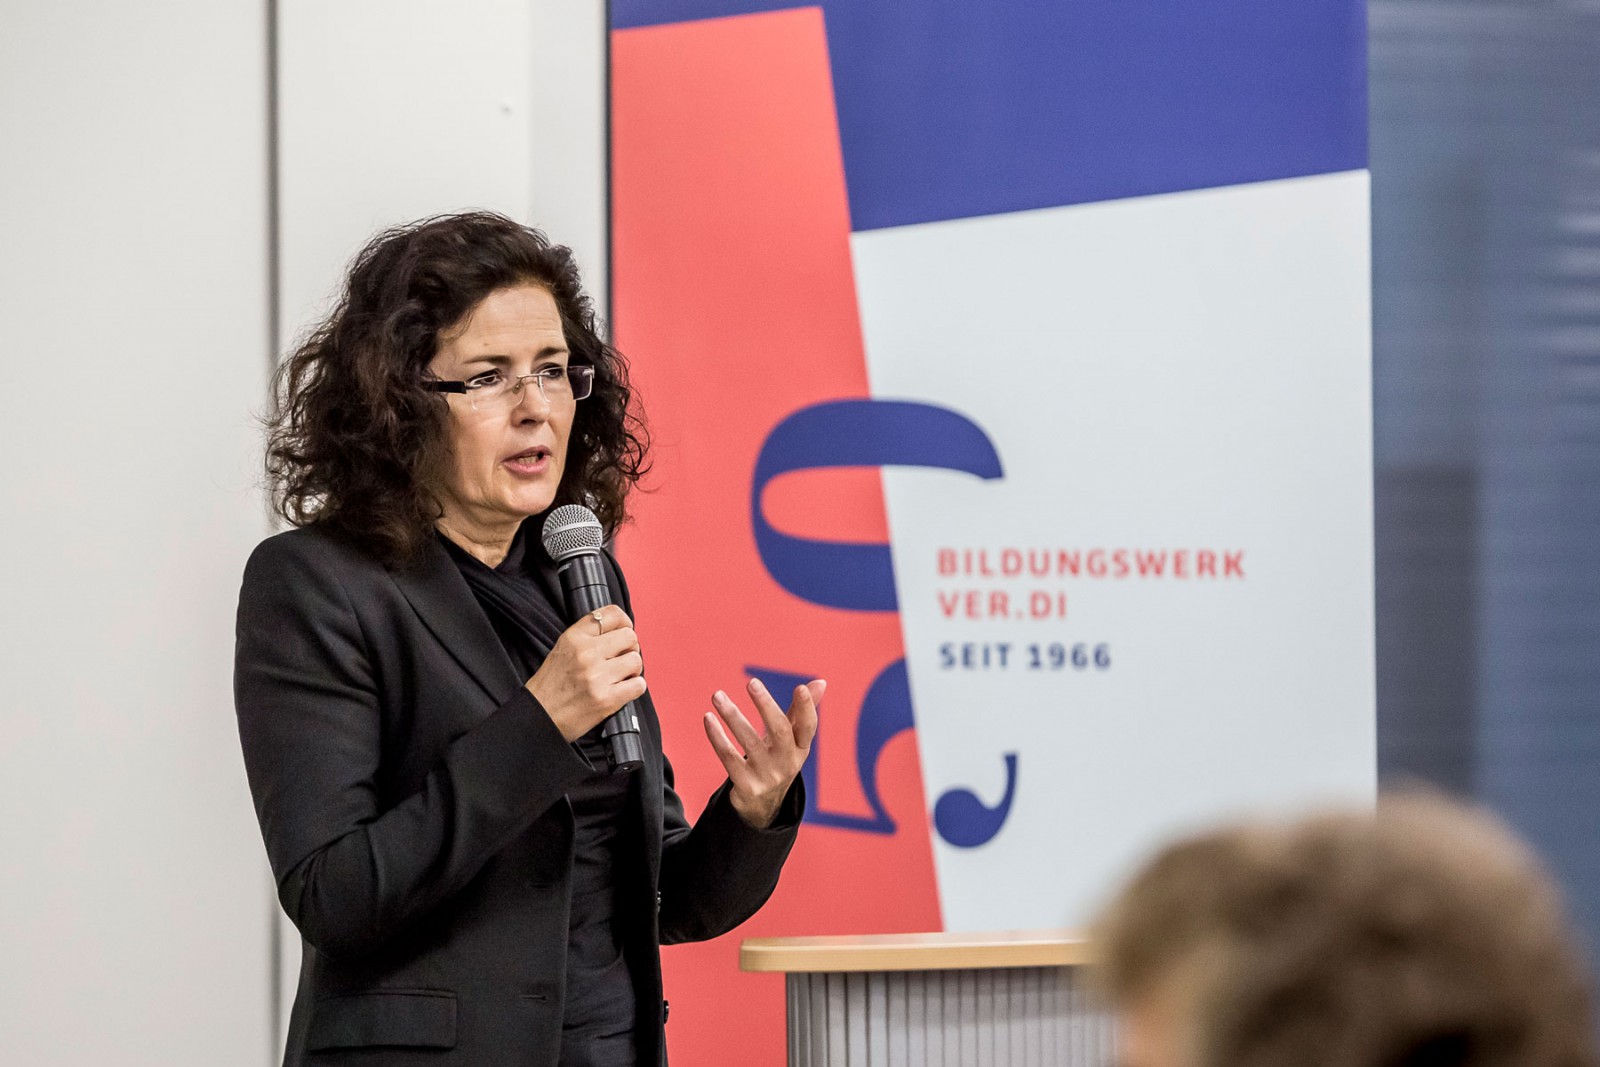 50th anniversary of the Bildungswerk in Niedersachsen